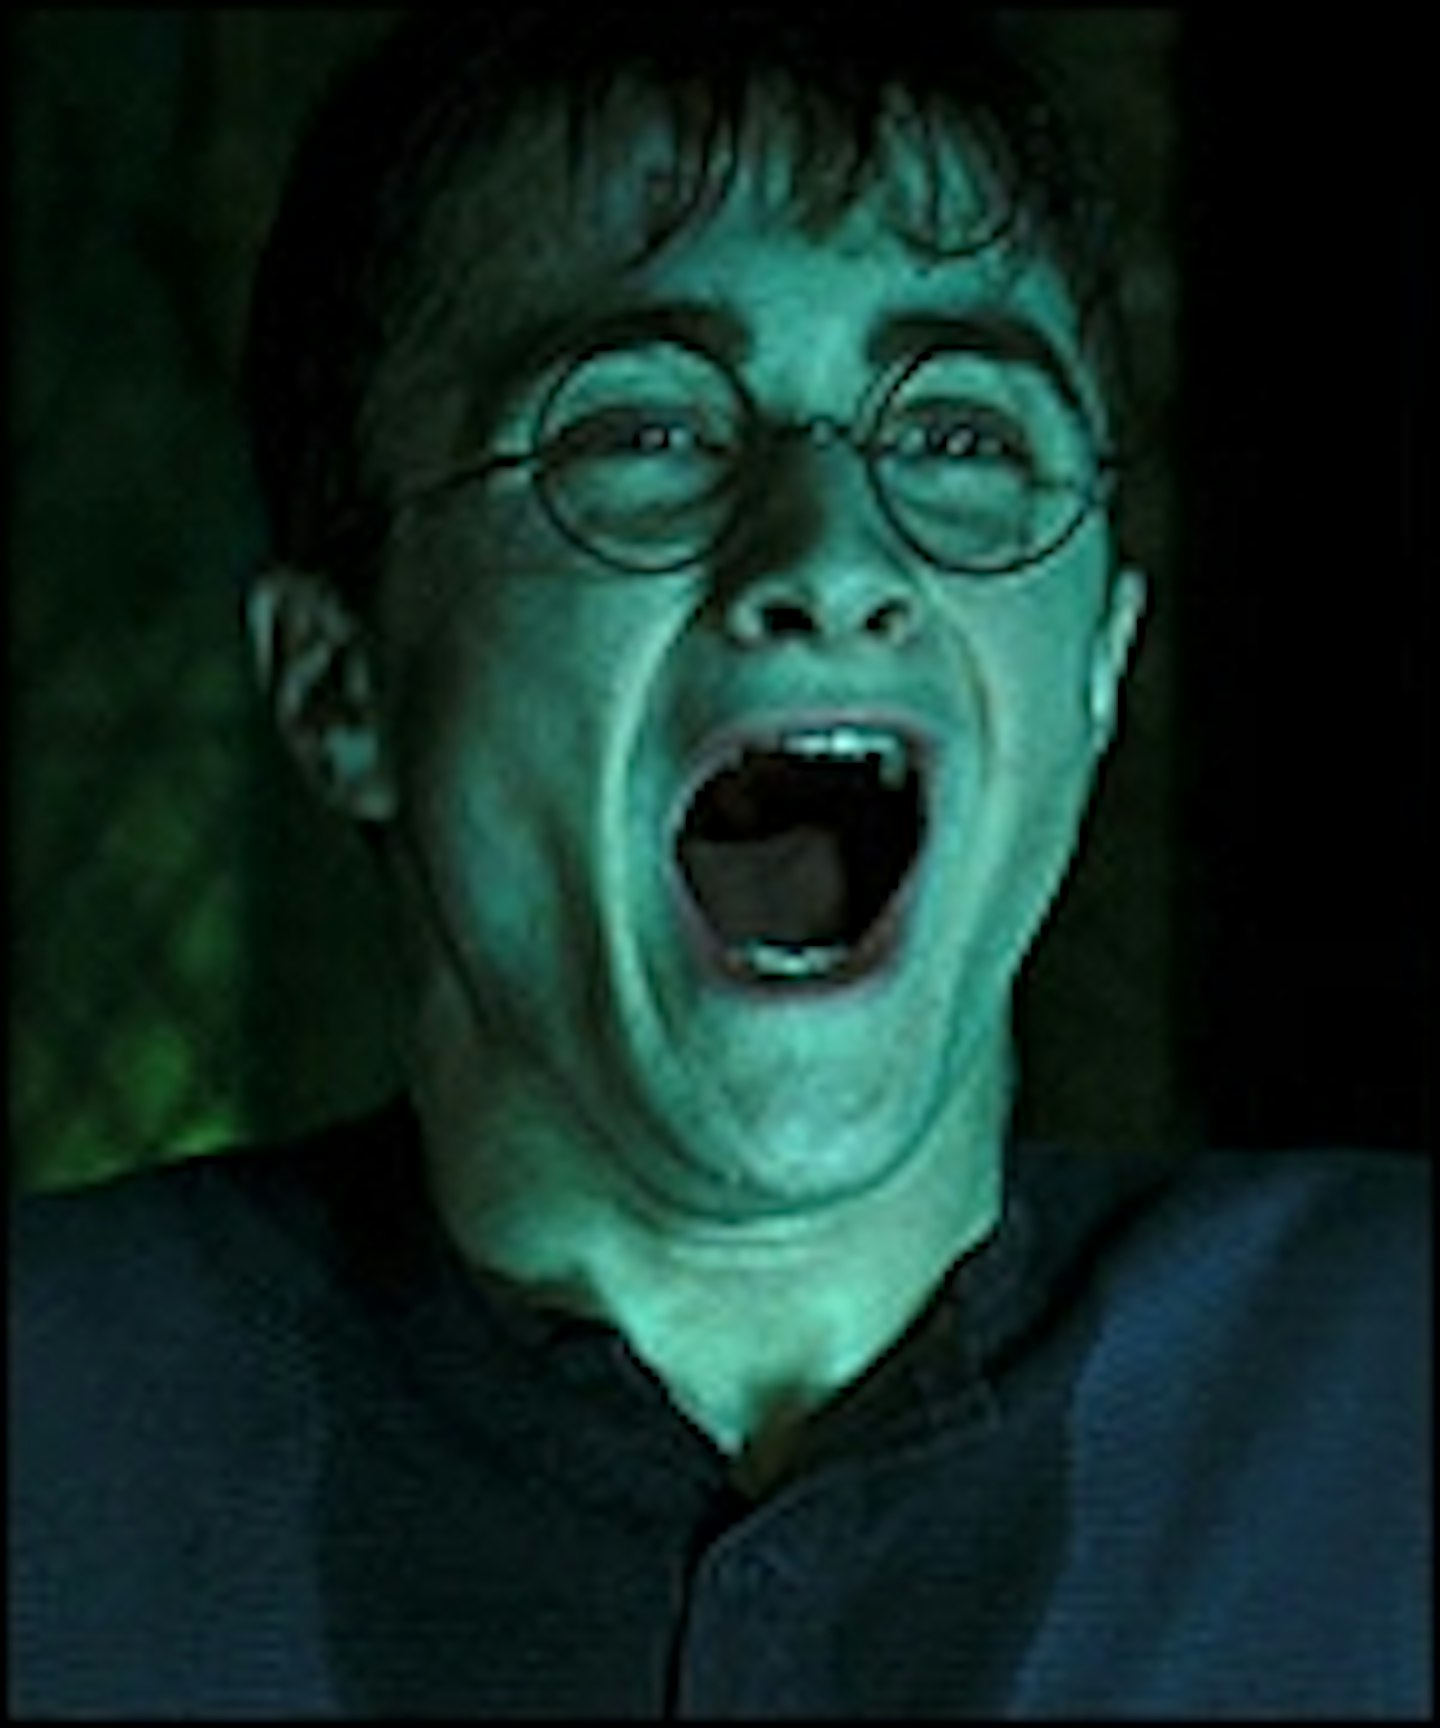 New Harry Potter 5 Pics Revealed